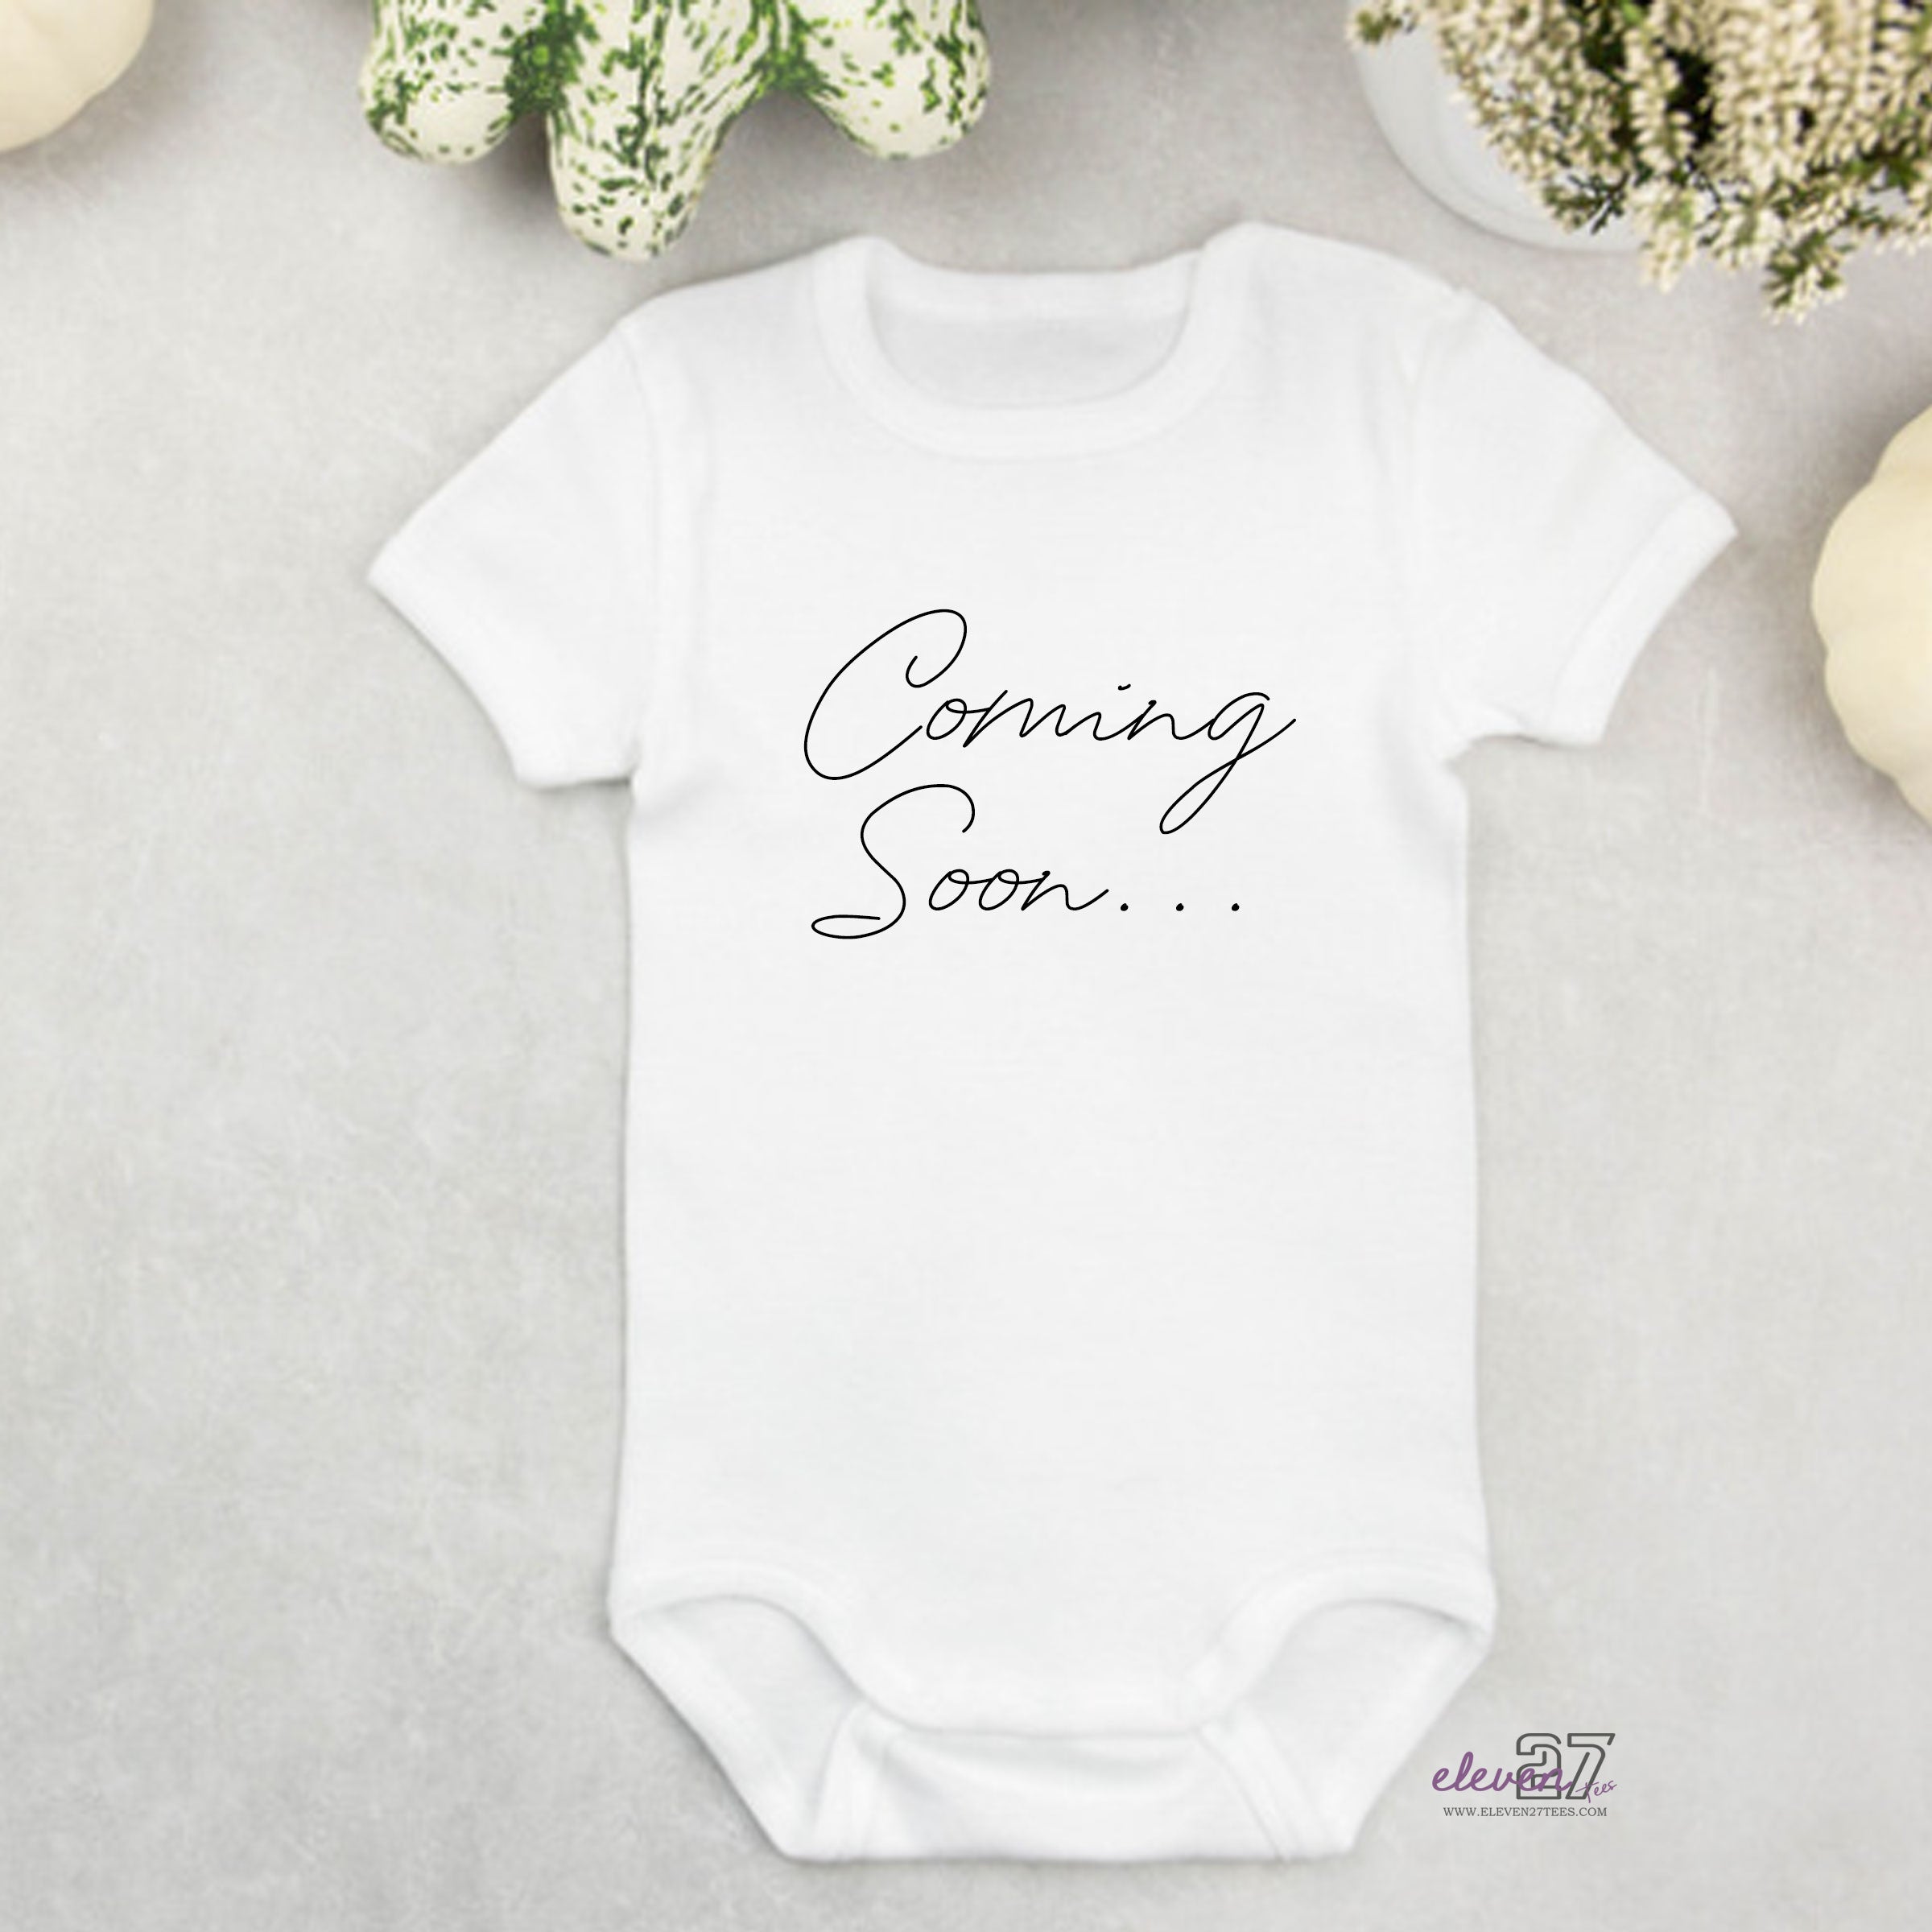 coming soon baby announcement onesie